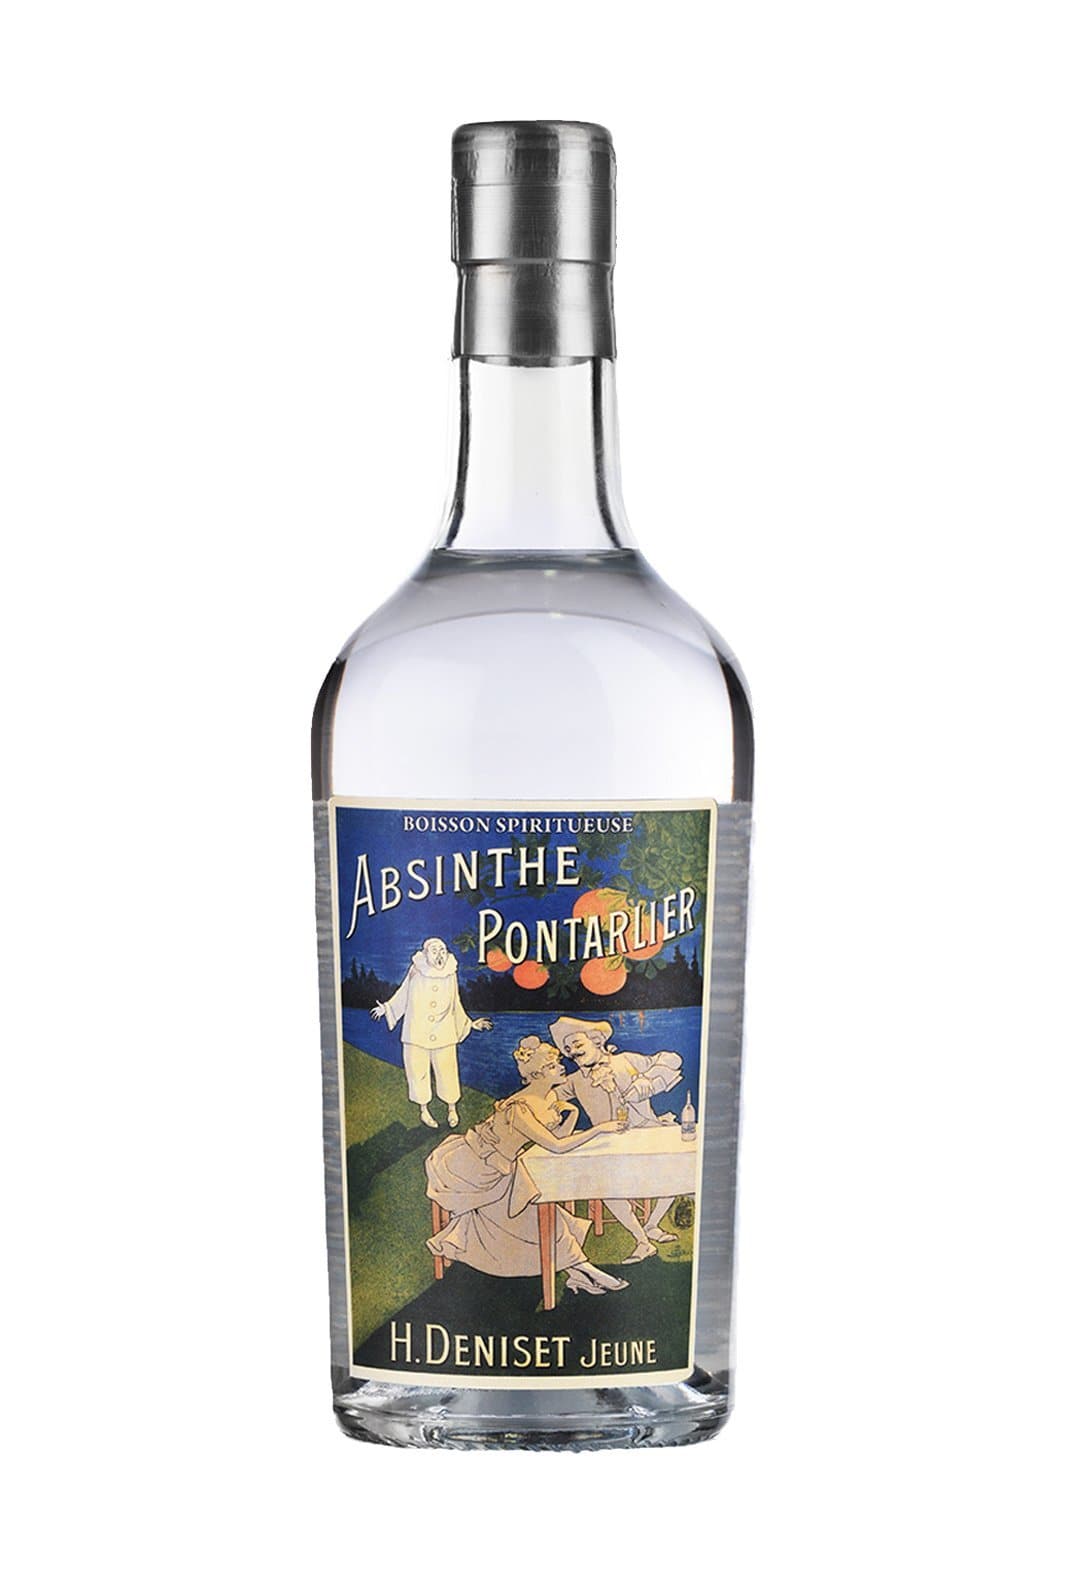 Distillerie Pernot Absinthe Deniset Jeune (Artemisia Absinthium de Pontarlier) 56% 500ml | Liqueurs | Shop online at Spirits of France